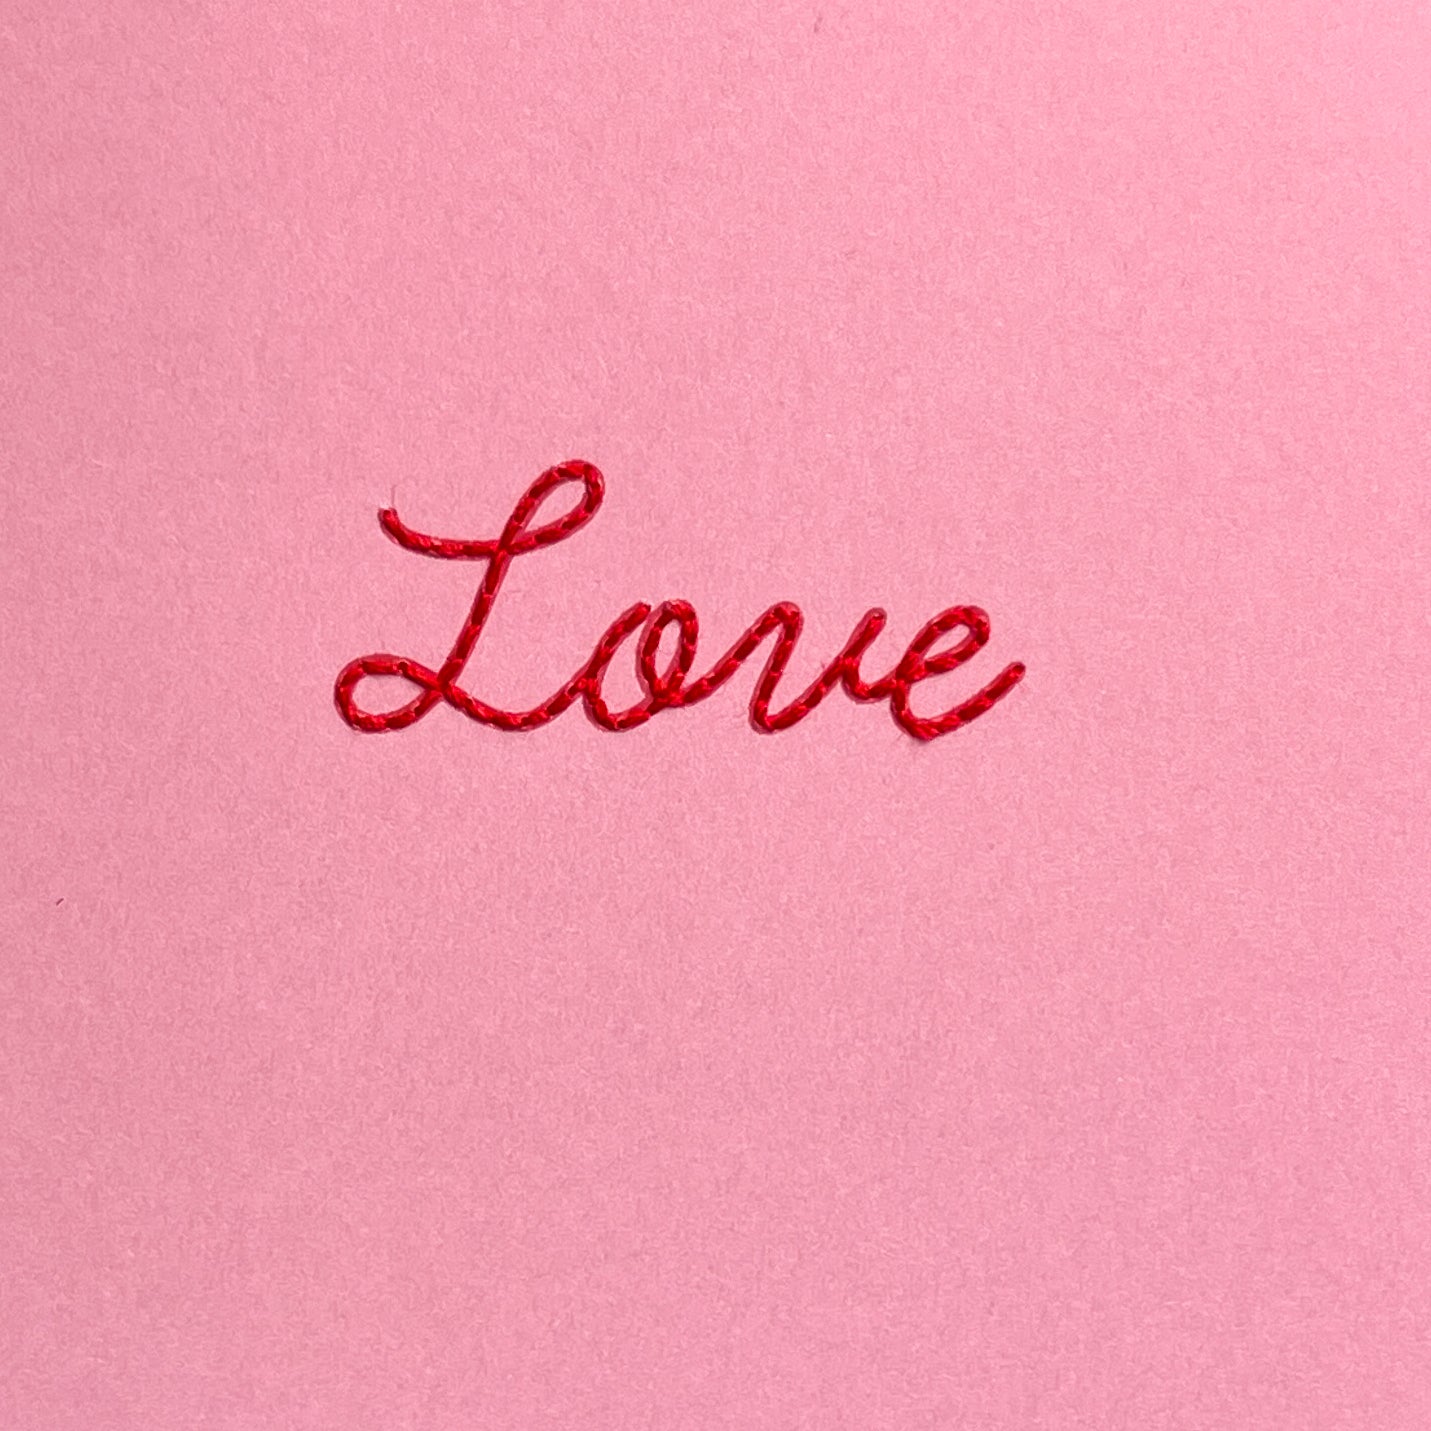 Valentines 'Love' Card